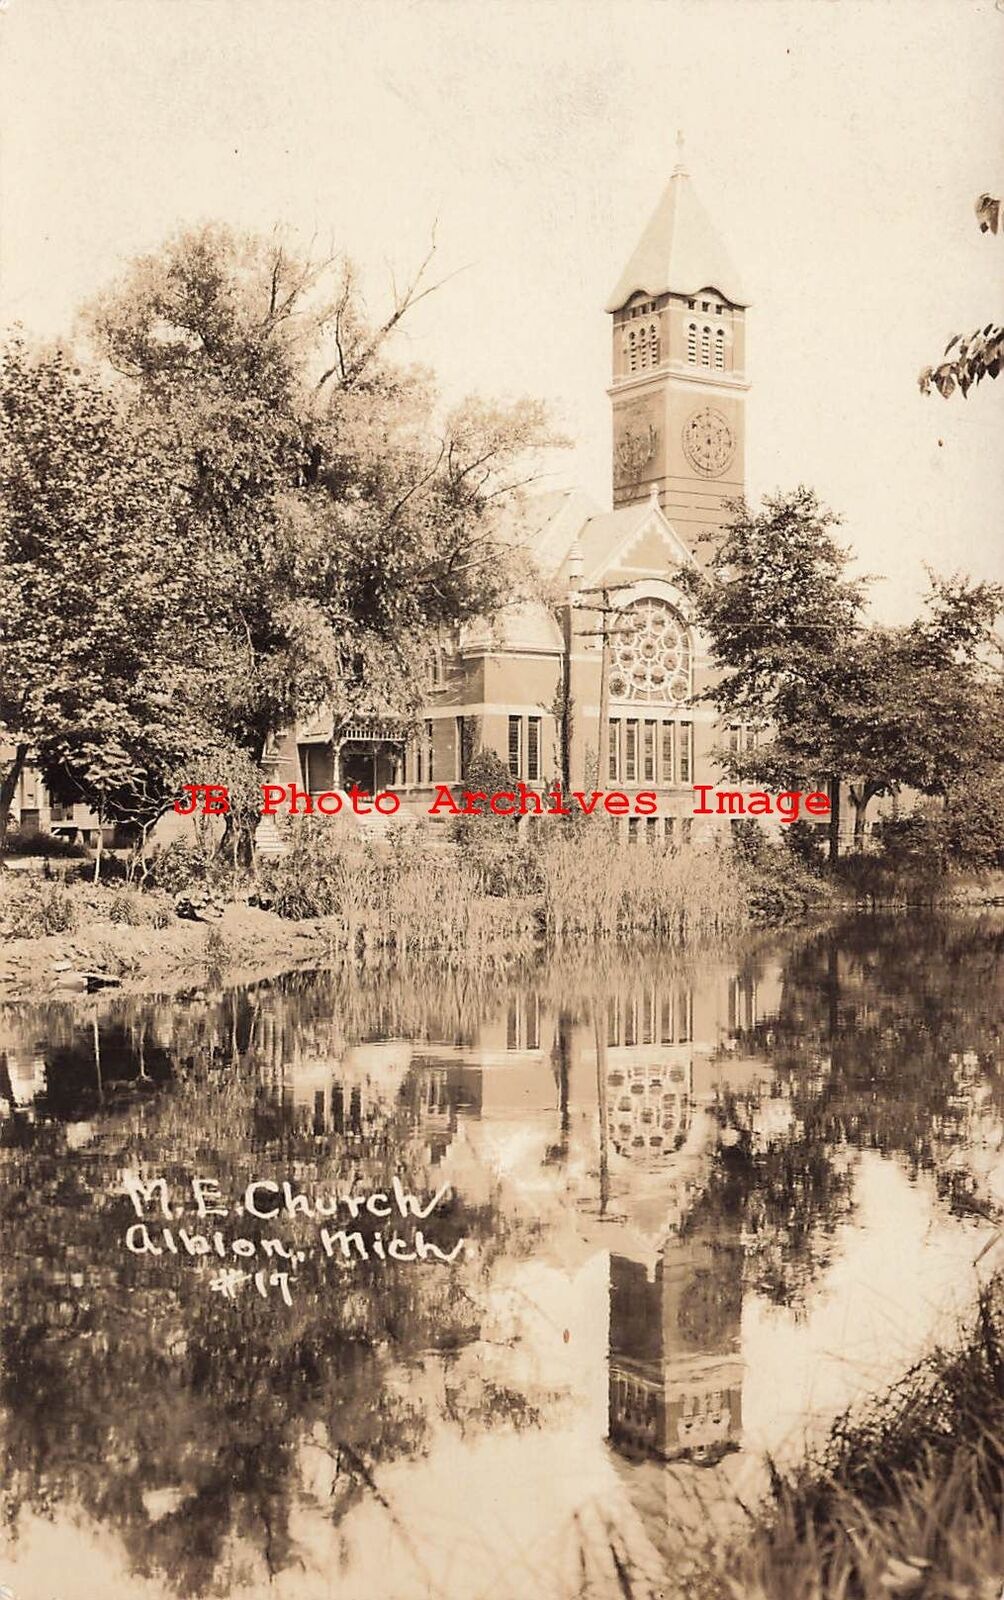 MI, Albion, Michigan, RPPC, Methodist Episcopal Church, Pond Reflection, Photo,